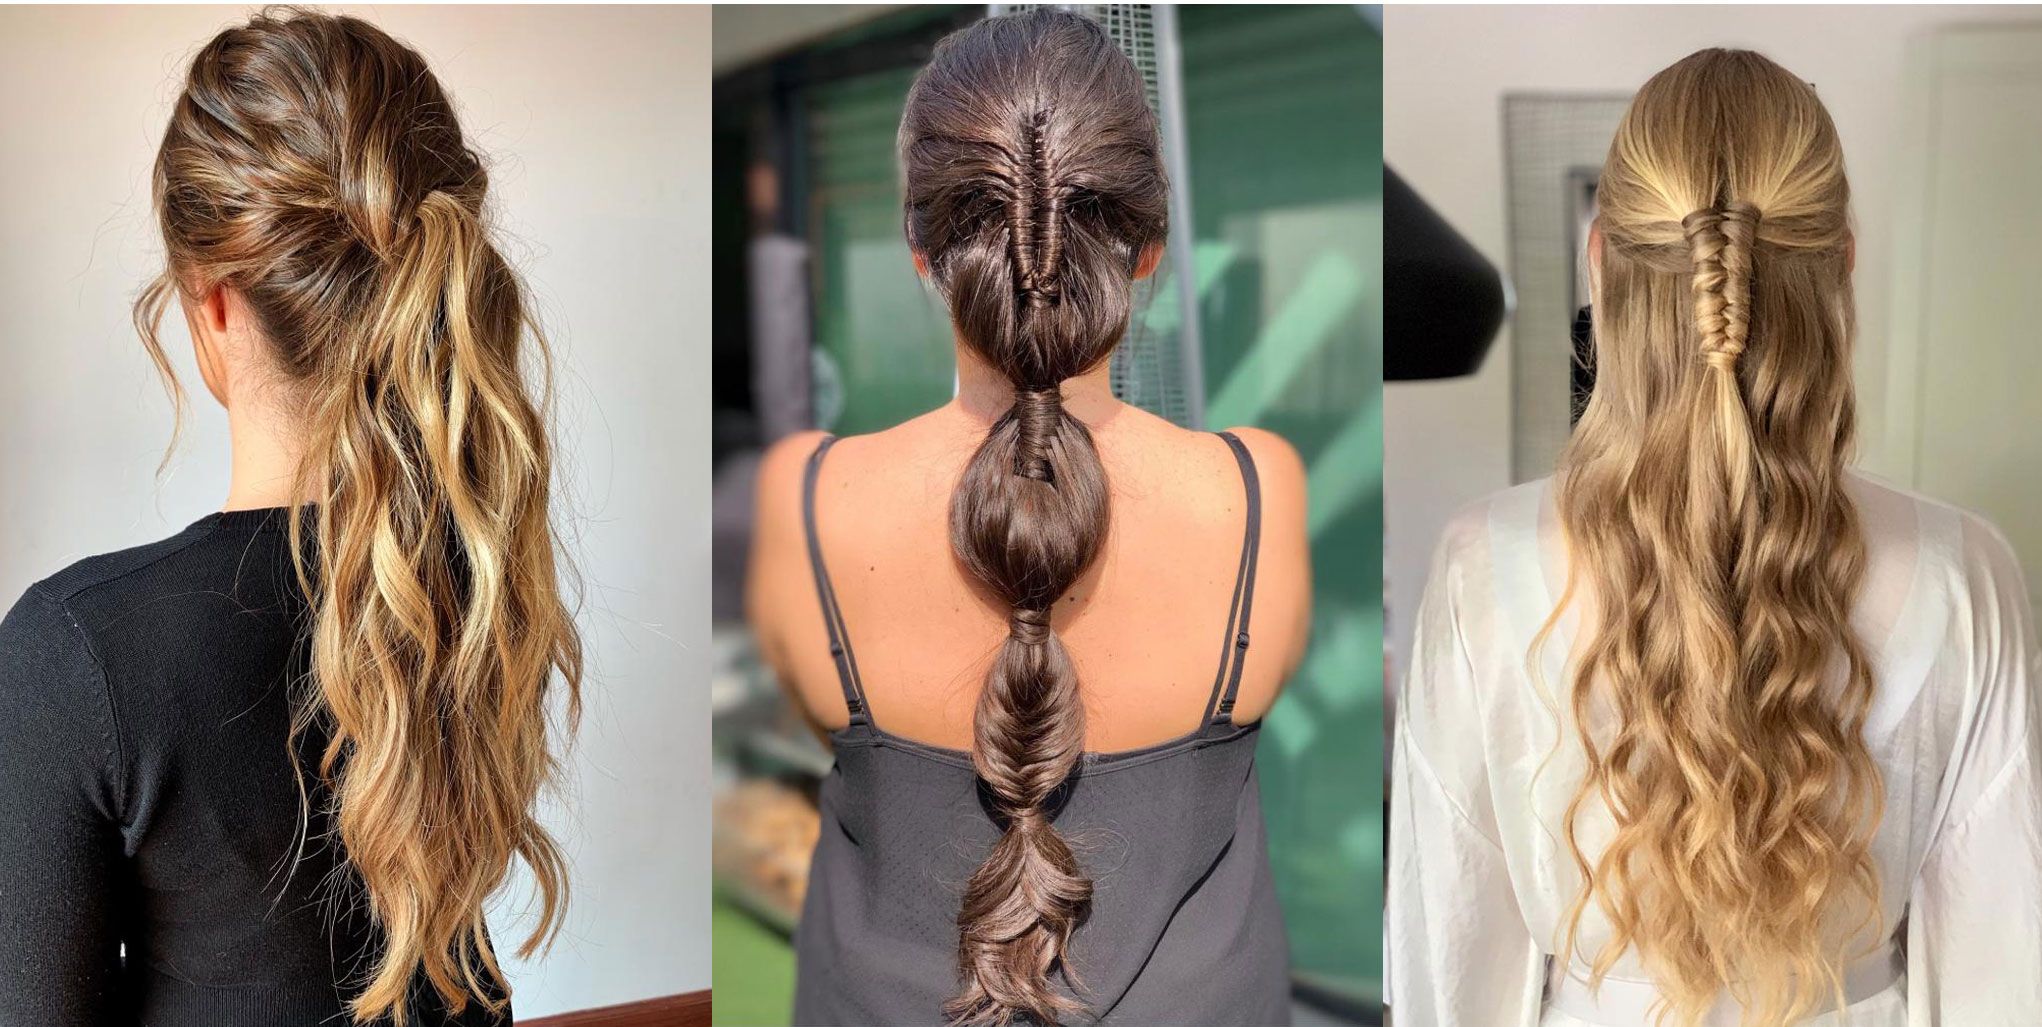  1001  ideas de recogidos fáciles y rápidos para cada tipo de cabello   Moño alto con trenza Peinados Recogido pelo largo